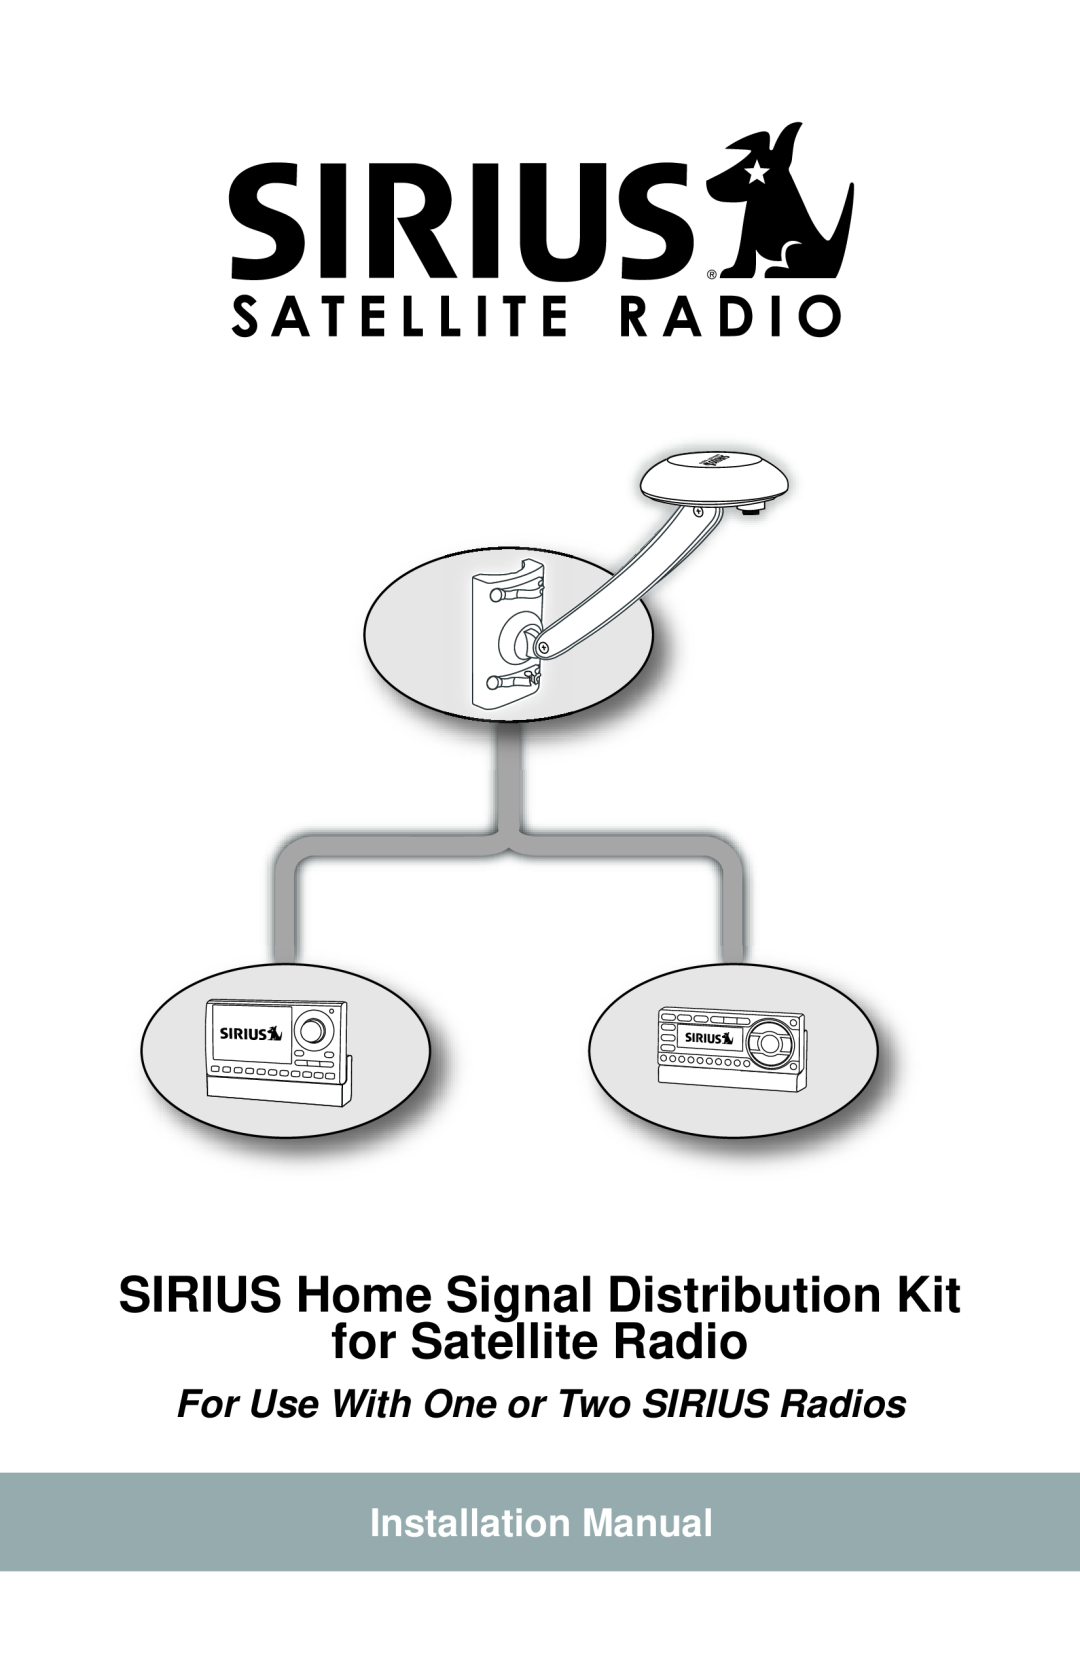 Sirius Satellite Radio SRS-2VB installation manual SIRIUS Home Signal Distribution Kit, for Satellite Radio 